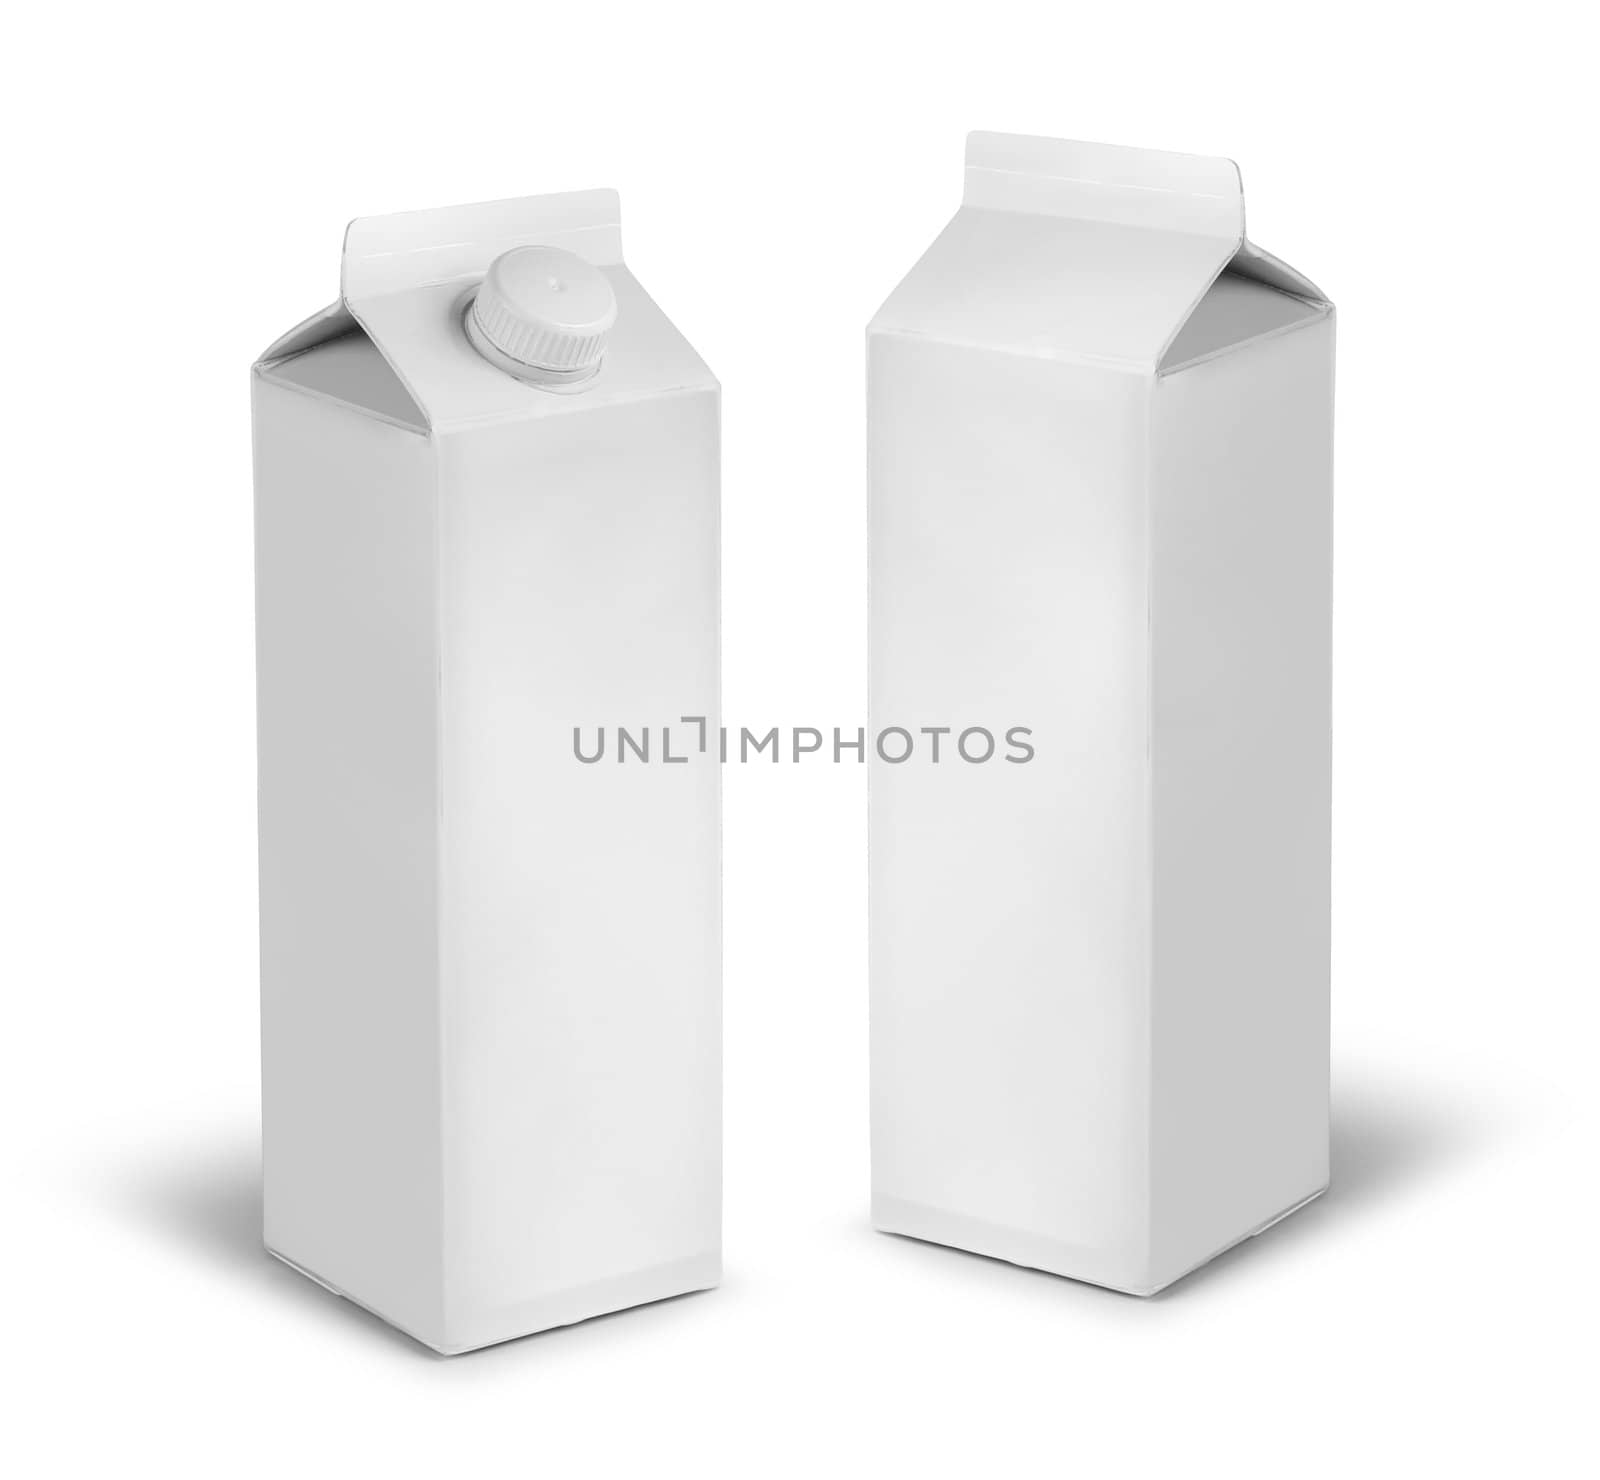 Blank milk or juice carton cans by anterovium